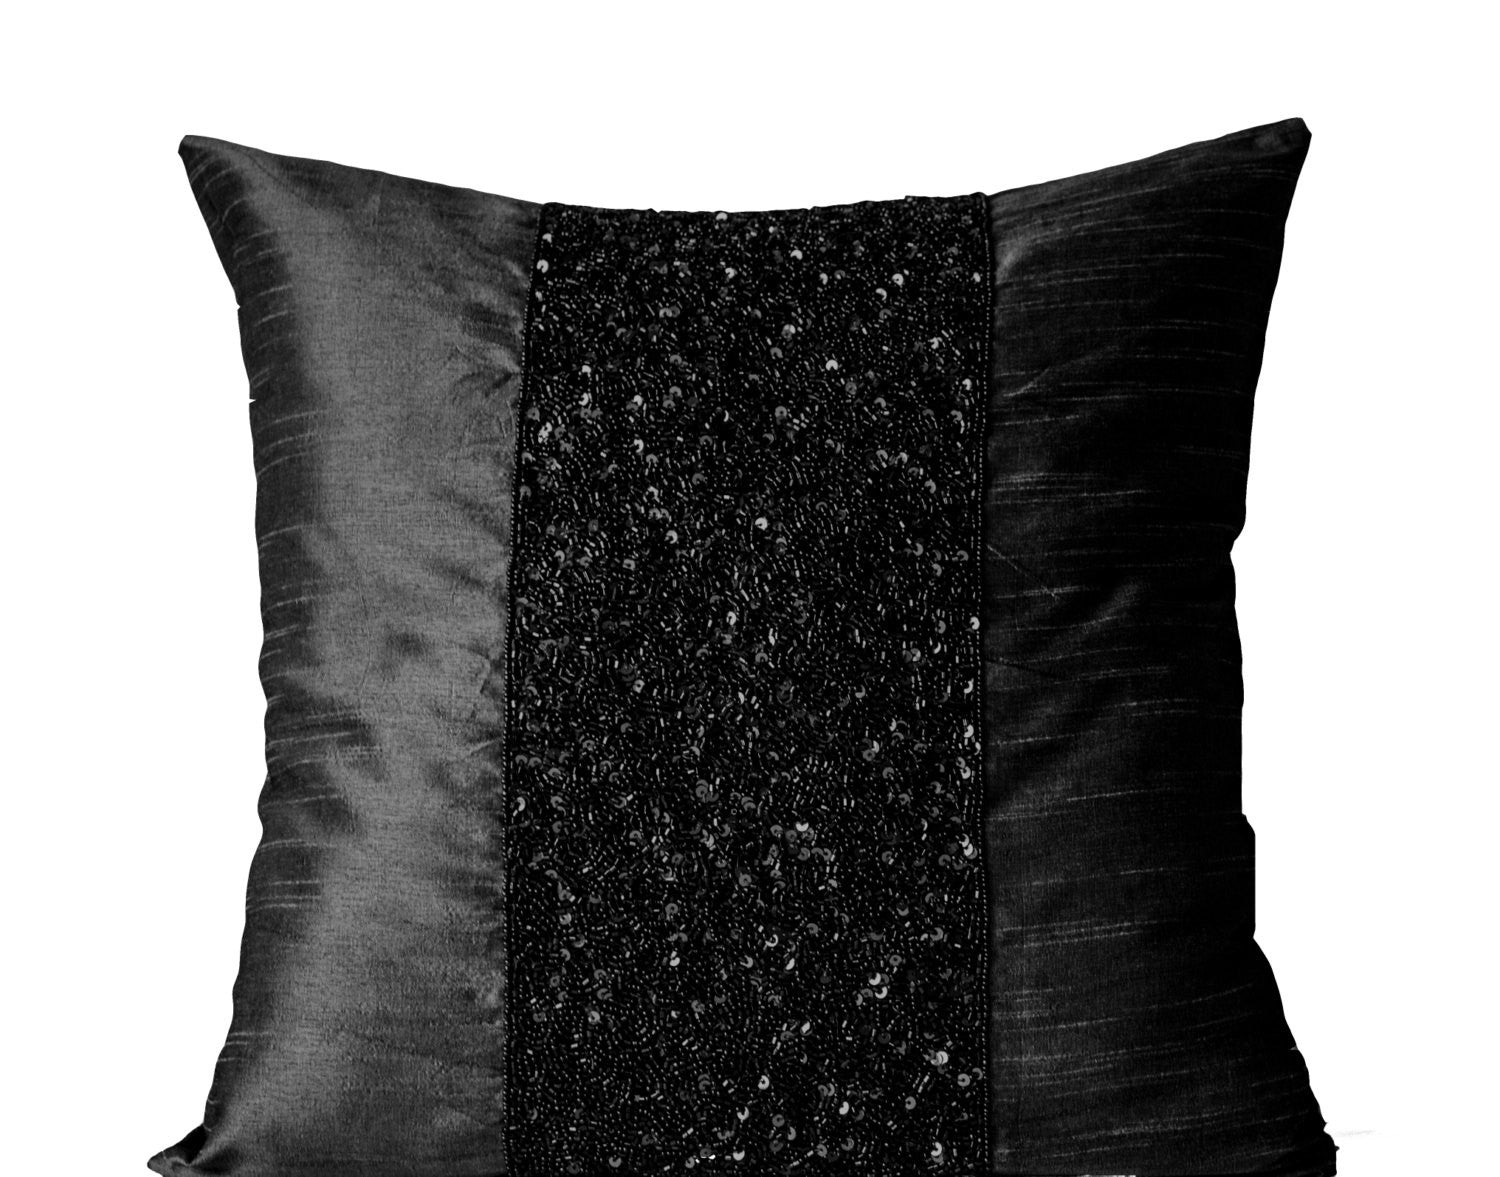 Handmade black silk pillow with metallic sparkles and beads